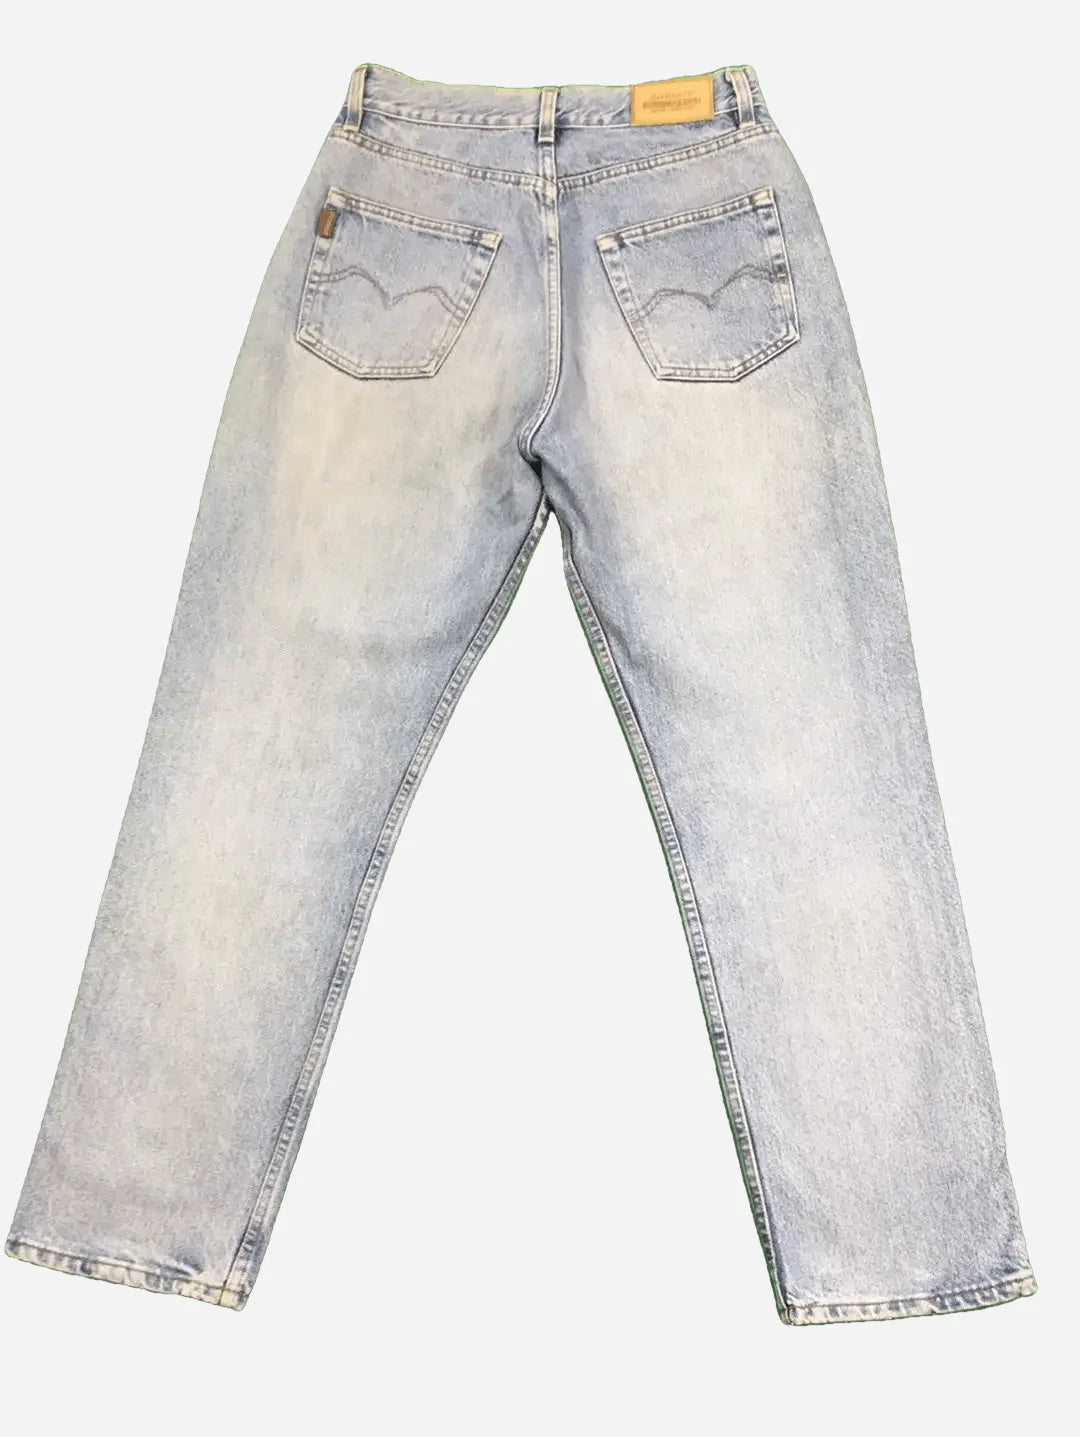 Marc O'Polo Jeans 31/29 (S)